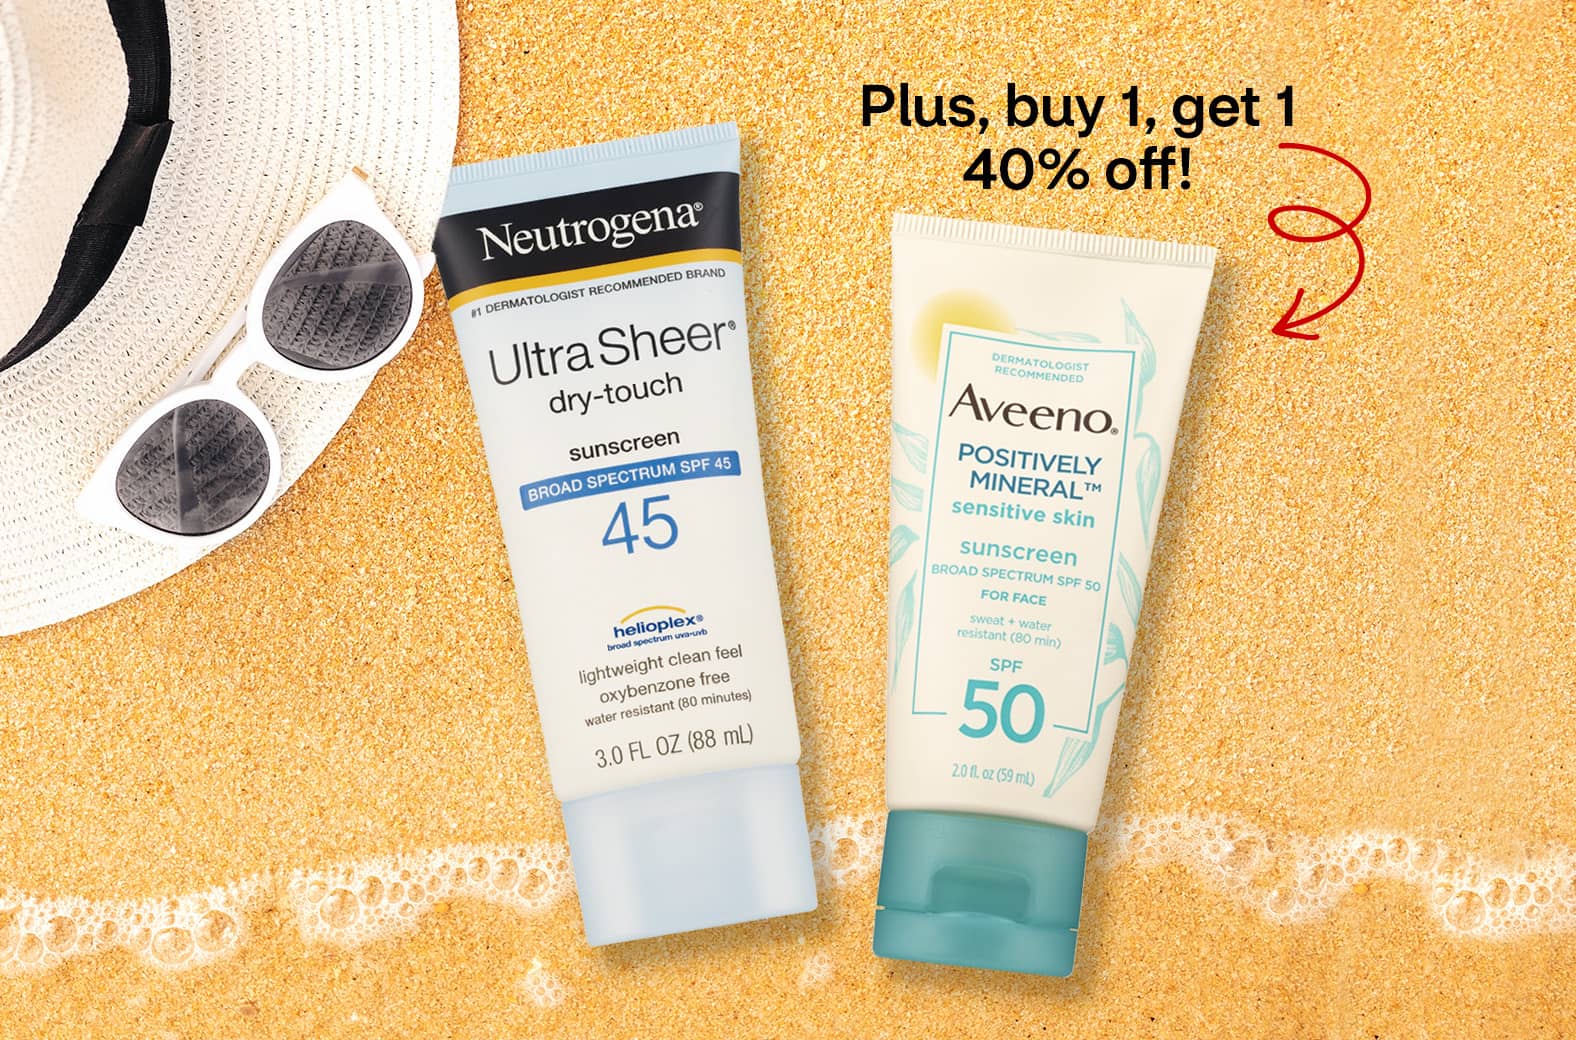 Neutrogena and Aveeno sun care products